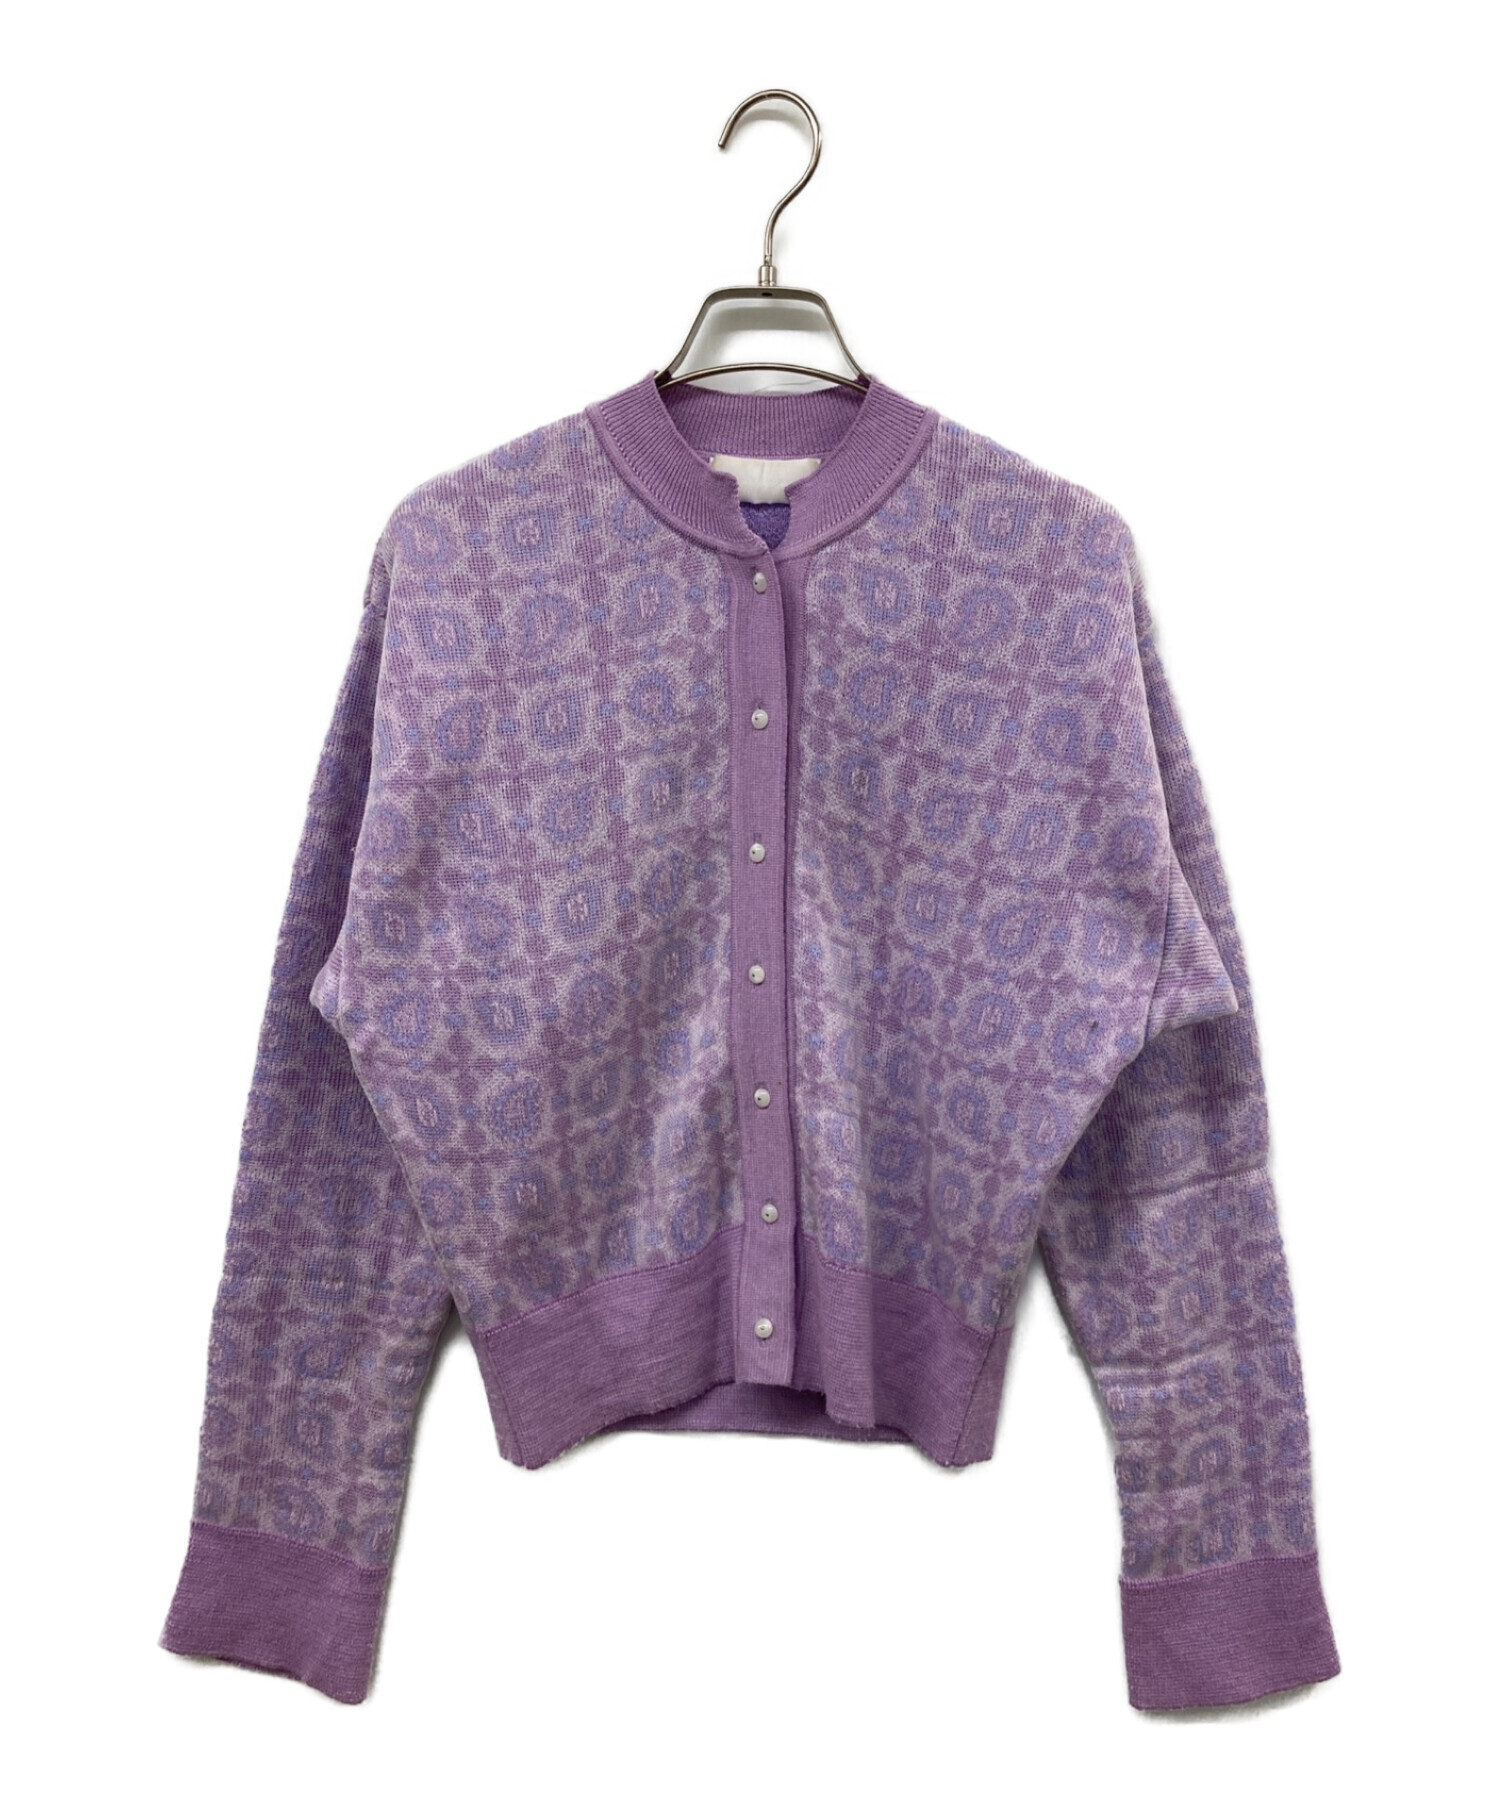 Mame Kurogouchi (マメクロゴウチ) Paisley Jaquard Knitted Cardigan  ペイズリージャガードニットカーディガン パープル サイズ:2